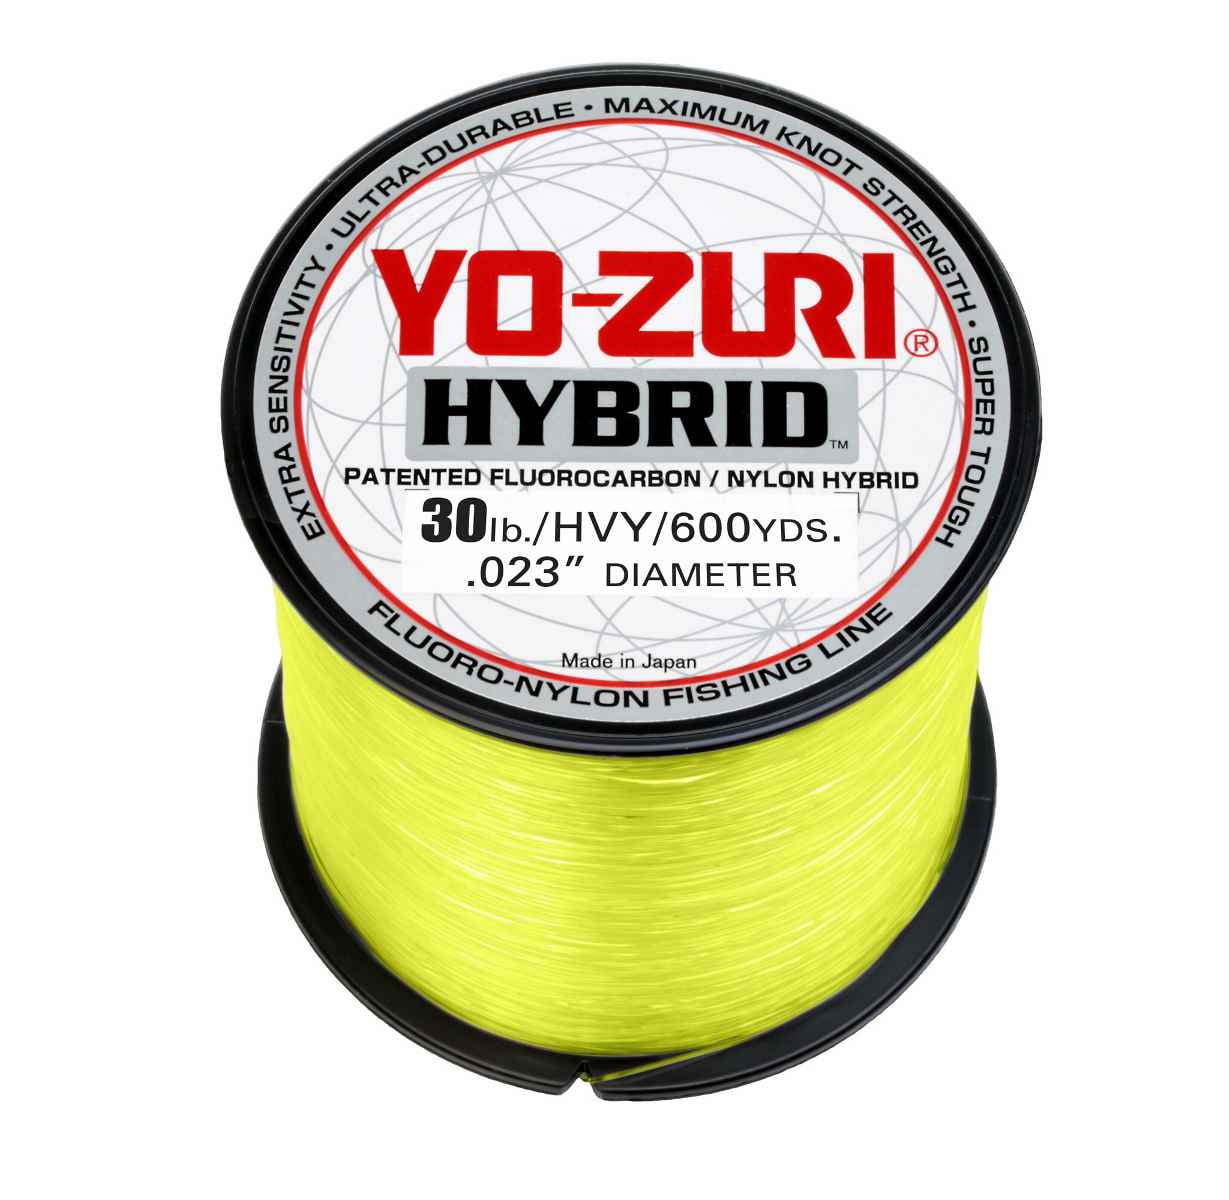 Yo-Zuri Hybrid 30lb 600yd High Vis Yellow Fishing Line